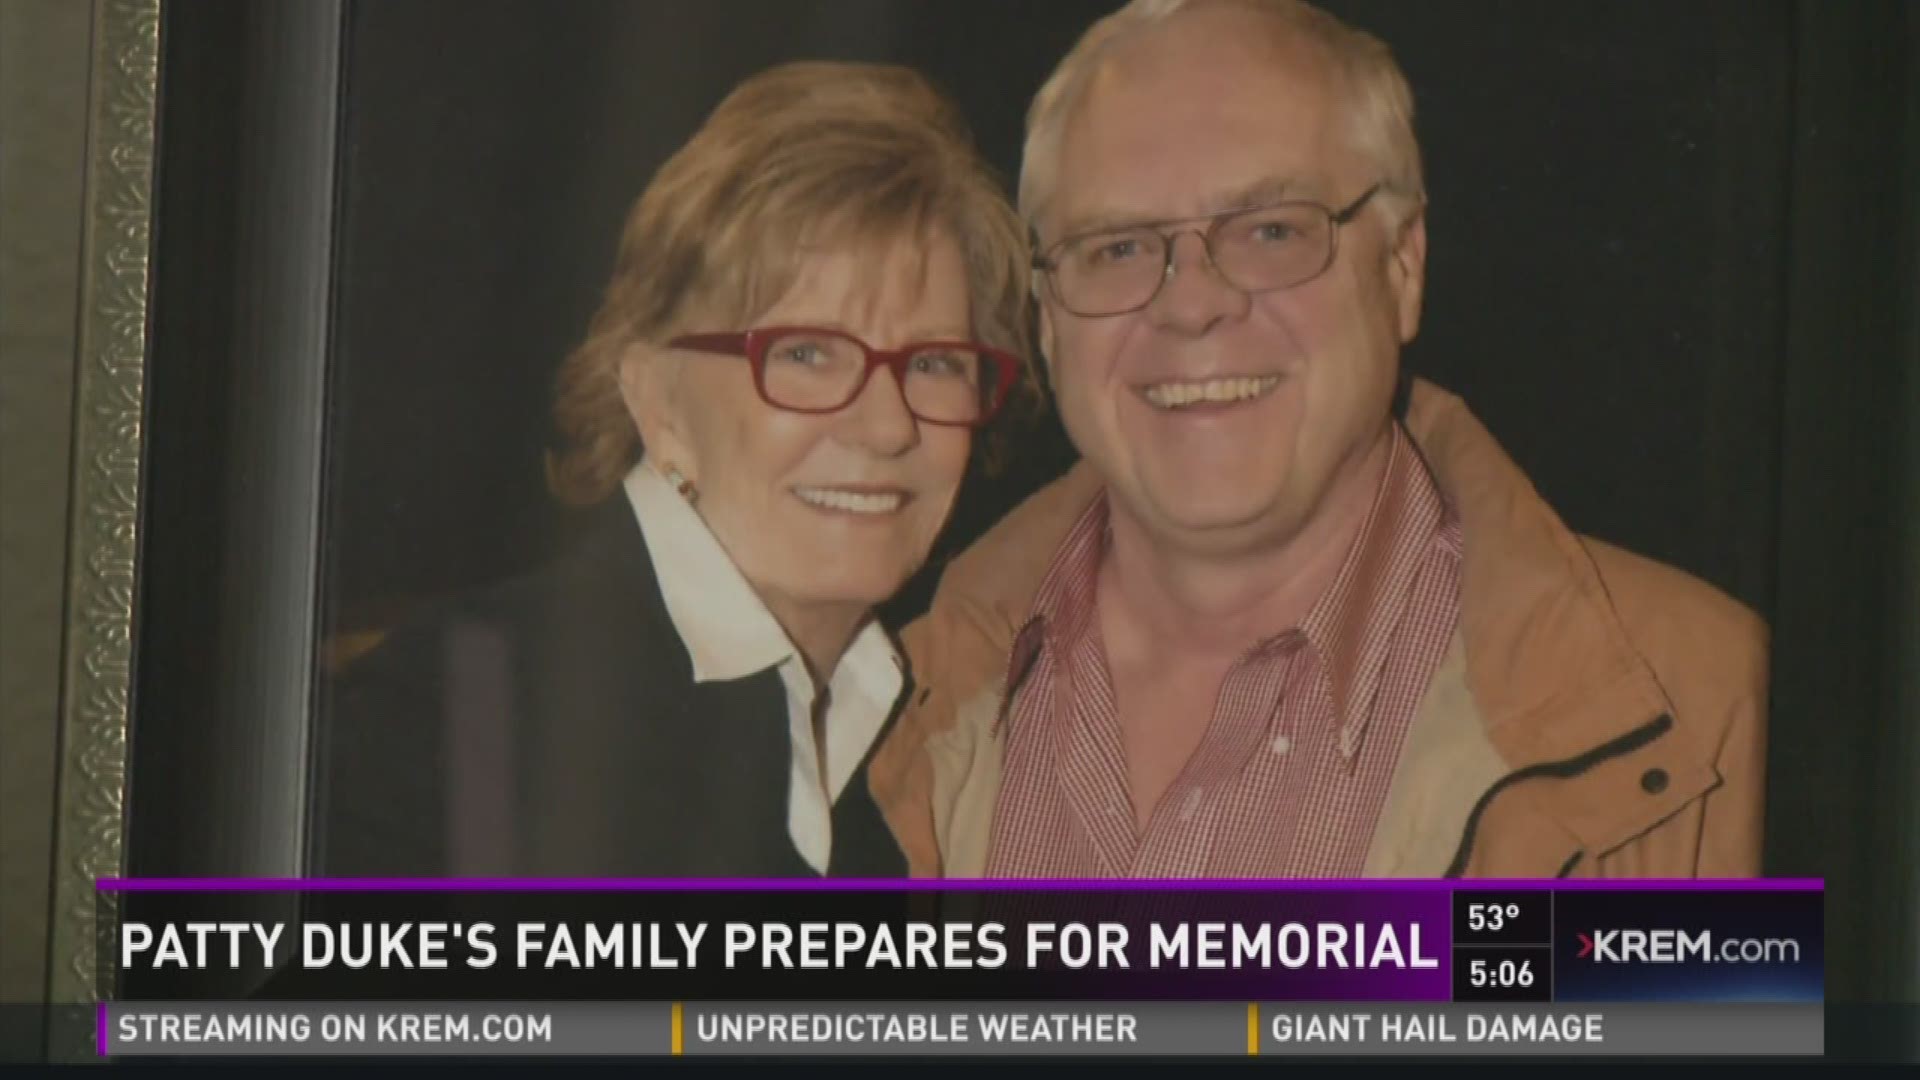 Patty Duke's family prepares for memorial